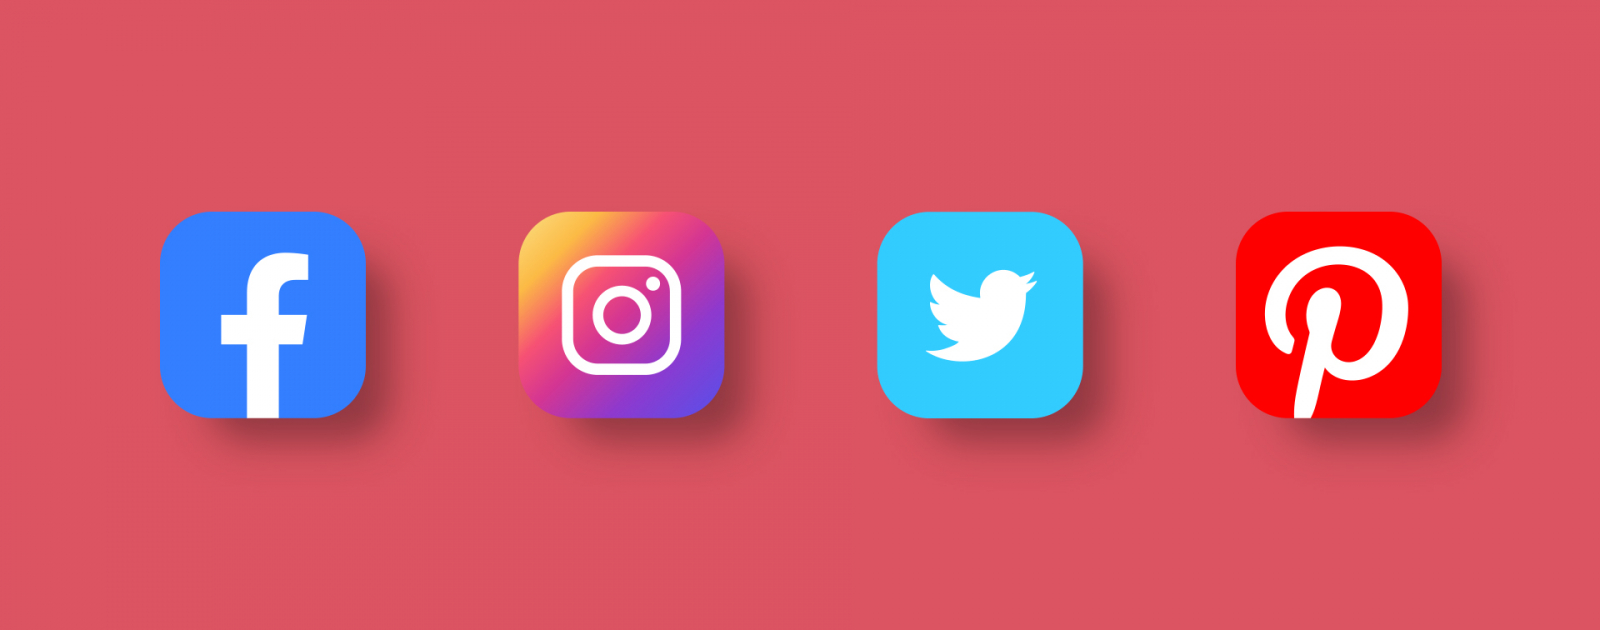 Facebook, Instagram, Twitter, and Pinterest logo